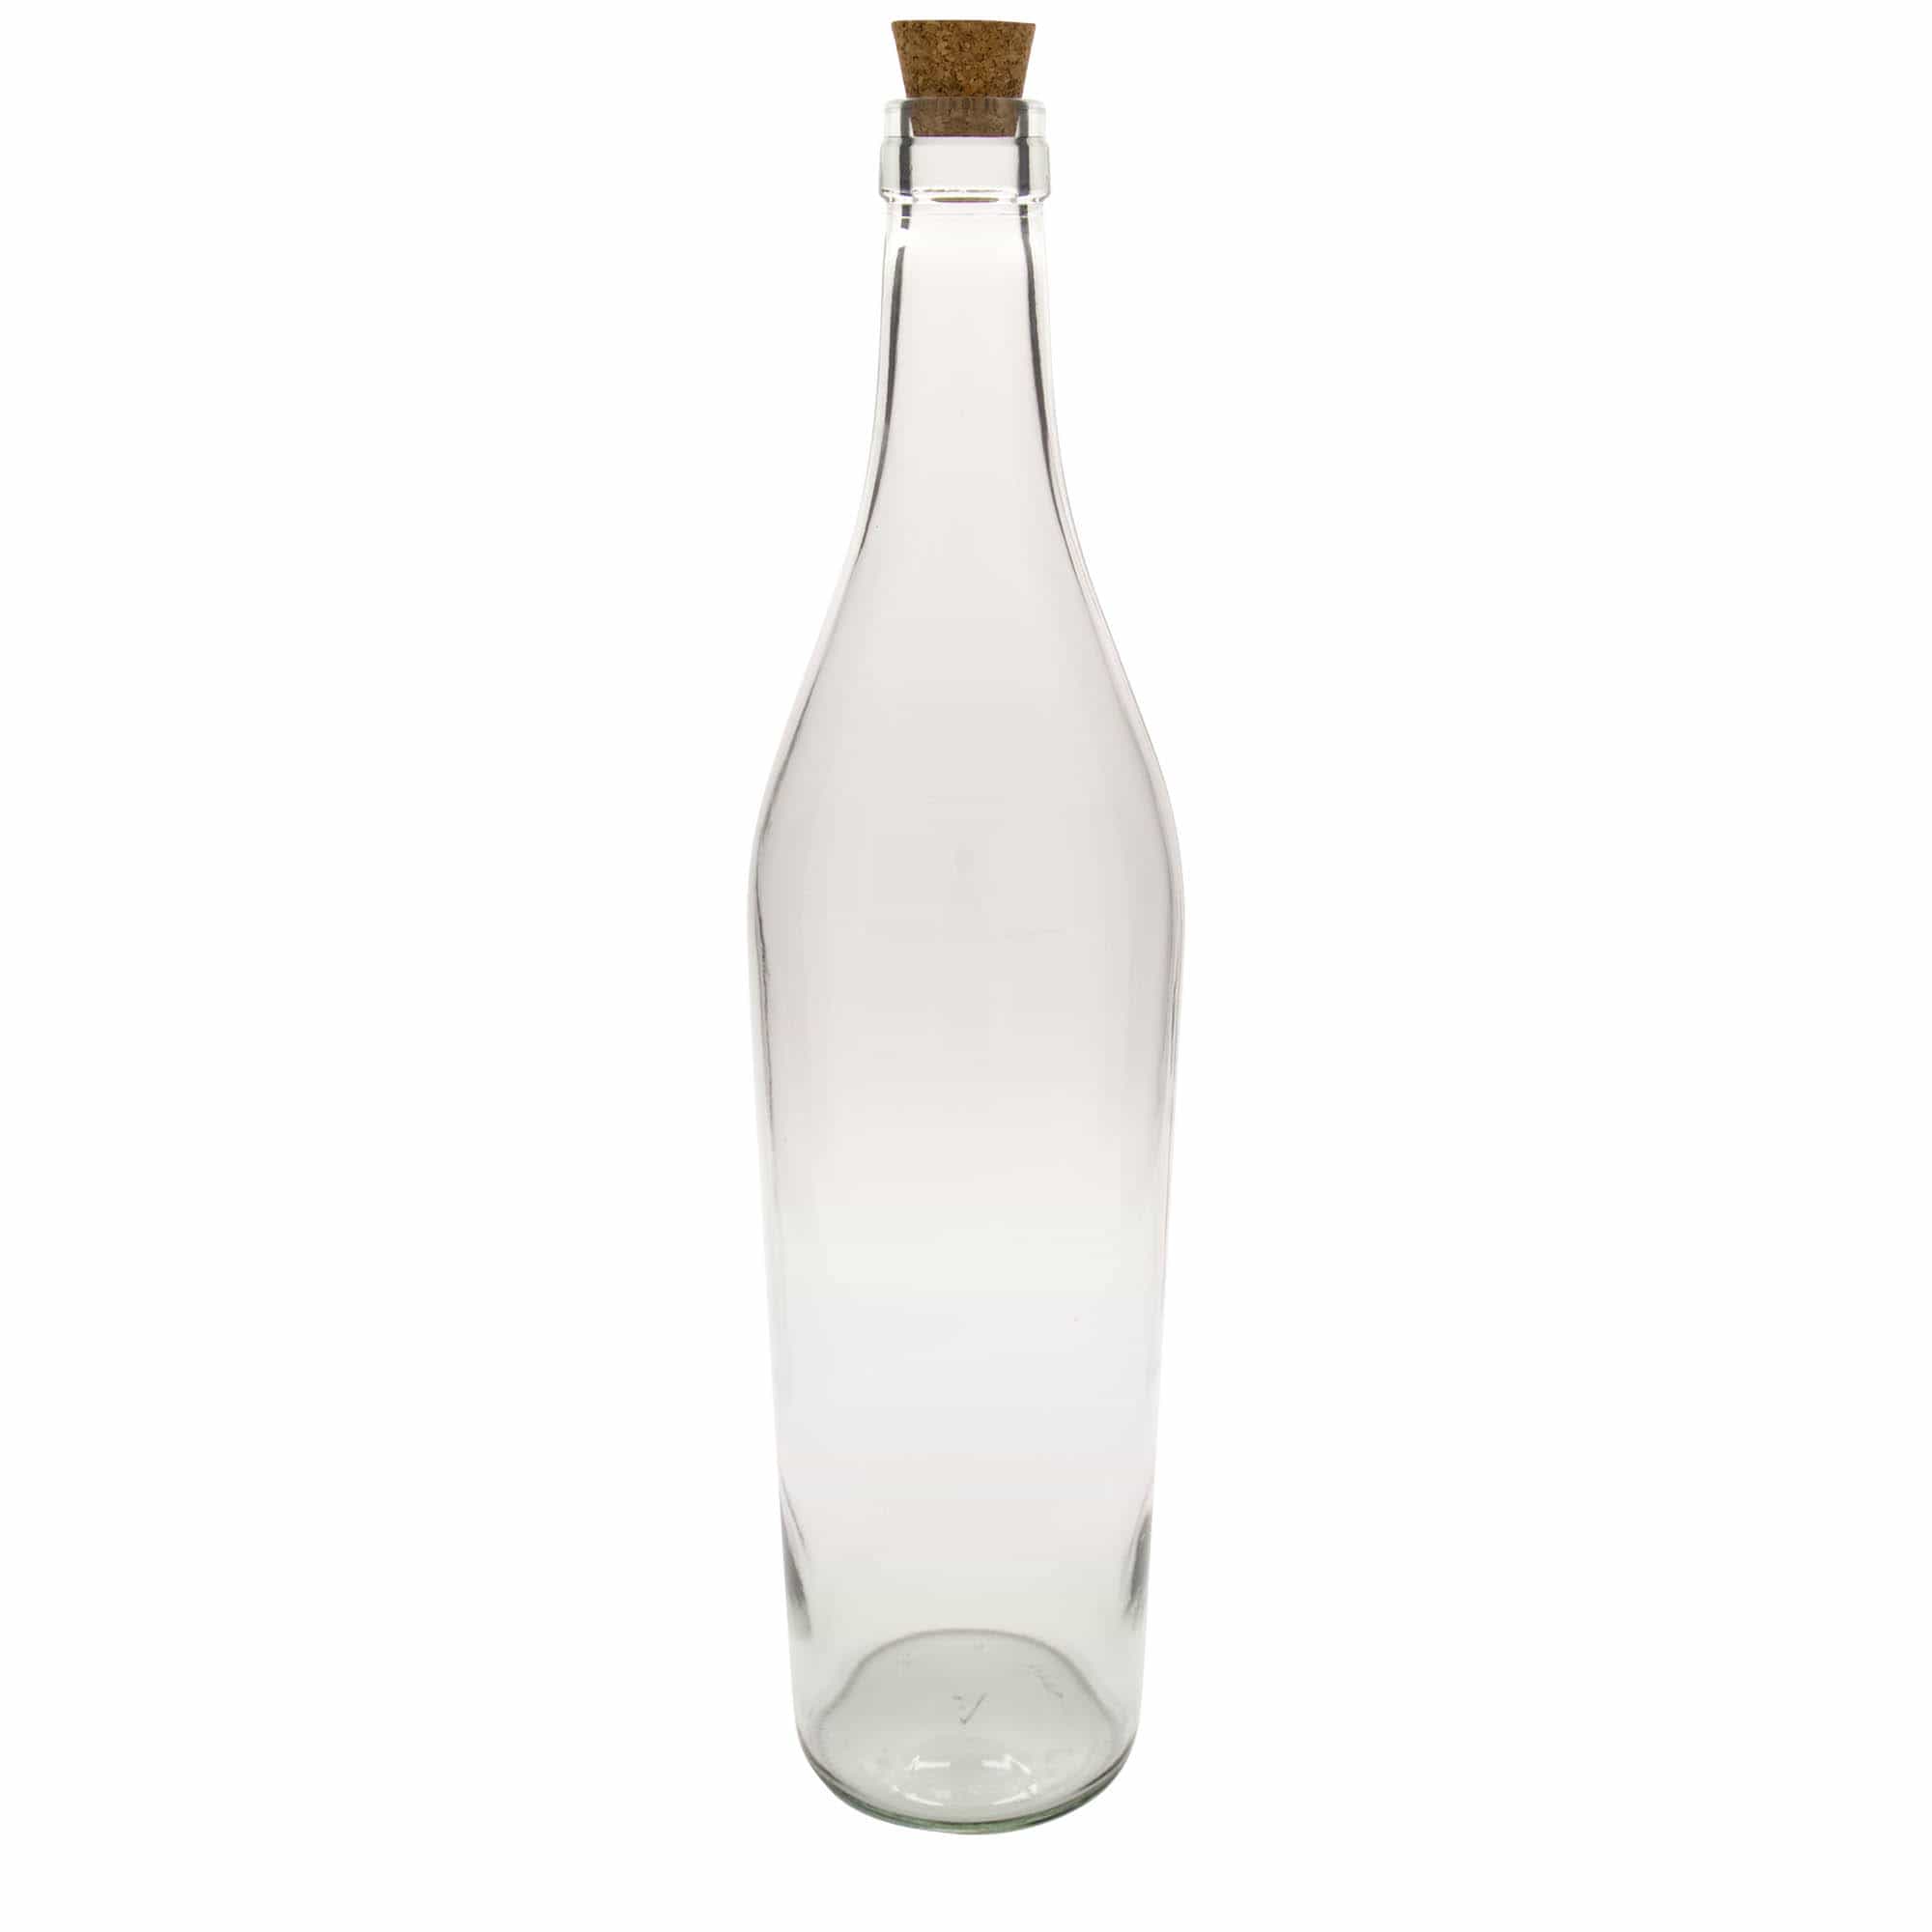 3,000 ml glass bottle 'Big Joe', closure: cork